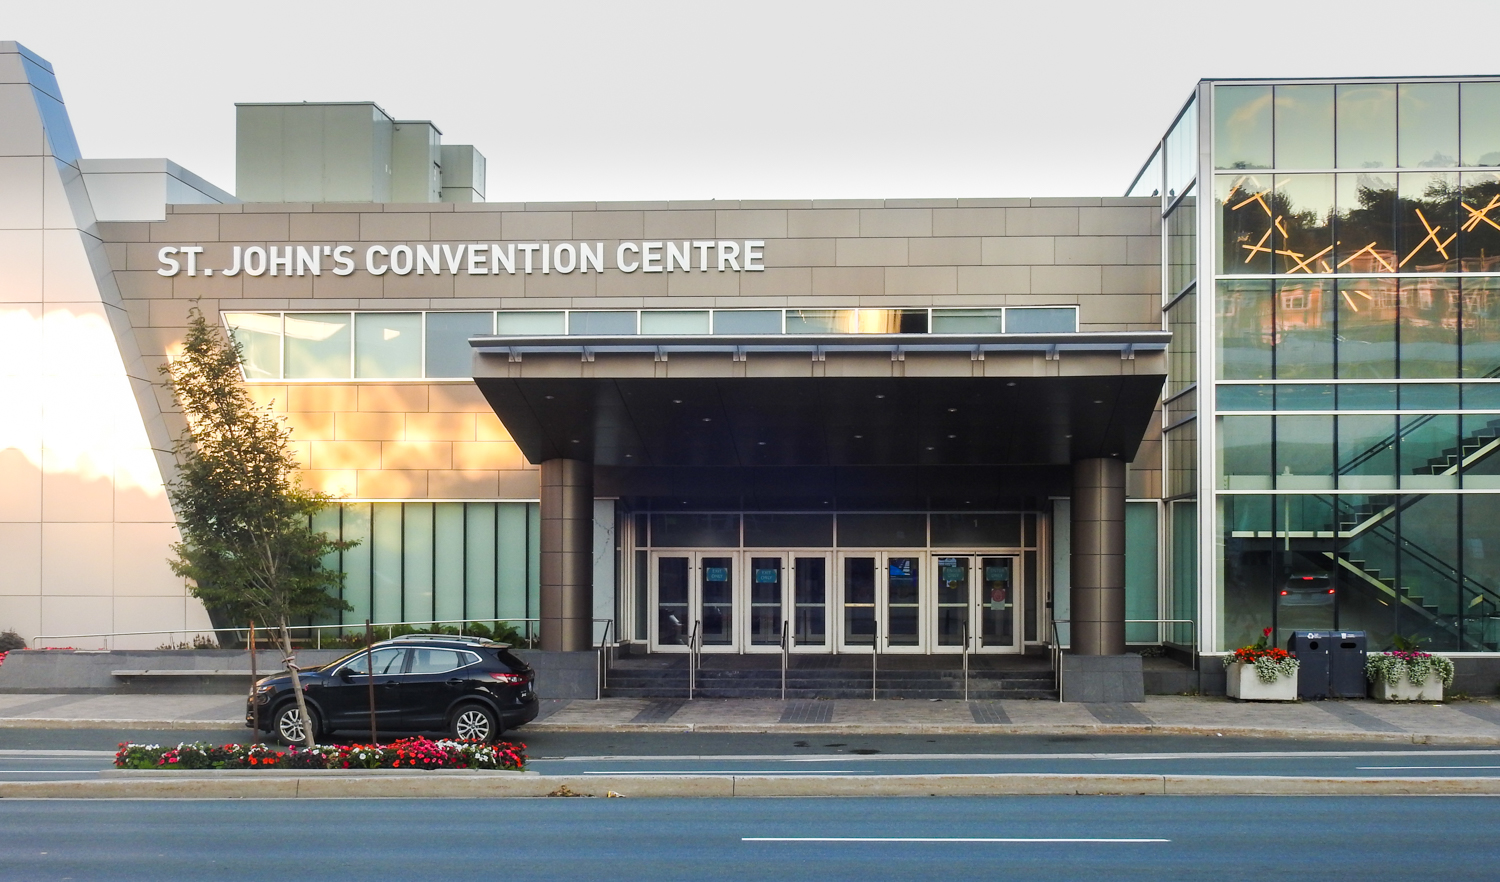 St. John's Convention Centre